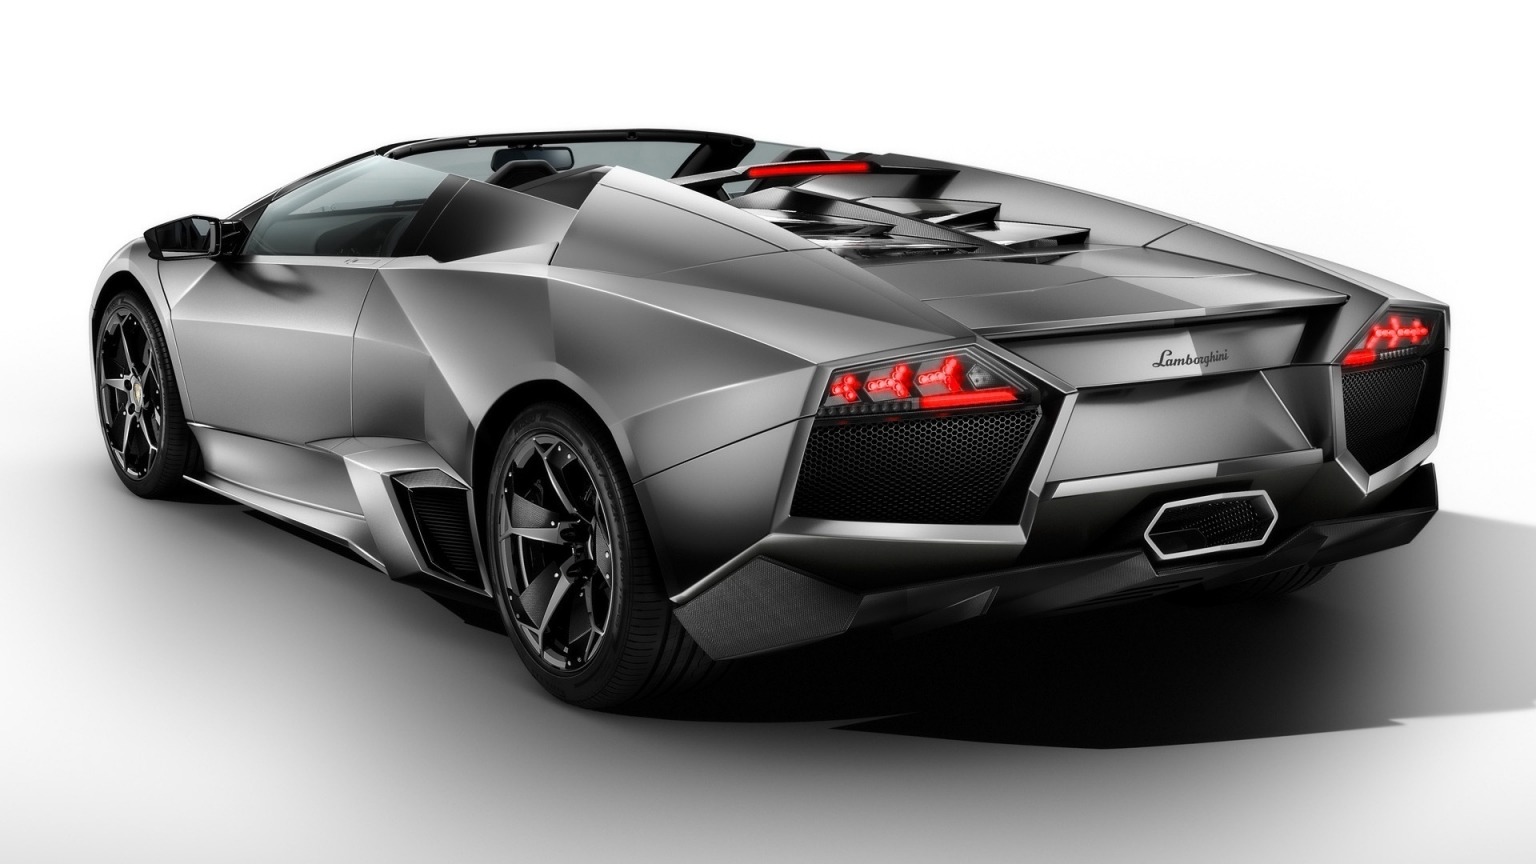 Lamborghini Reventon Roadster Rear 2010 for 1536 x 864 HDTV resolution